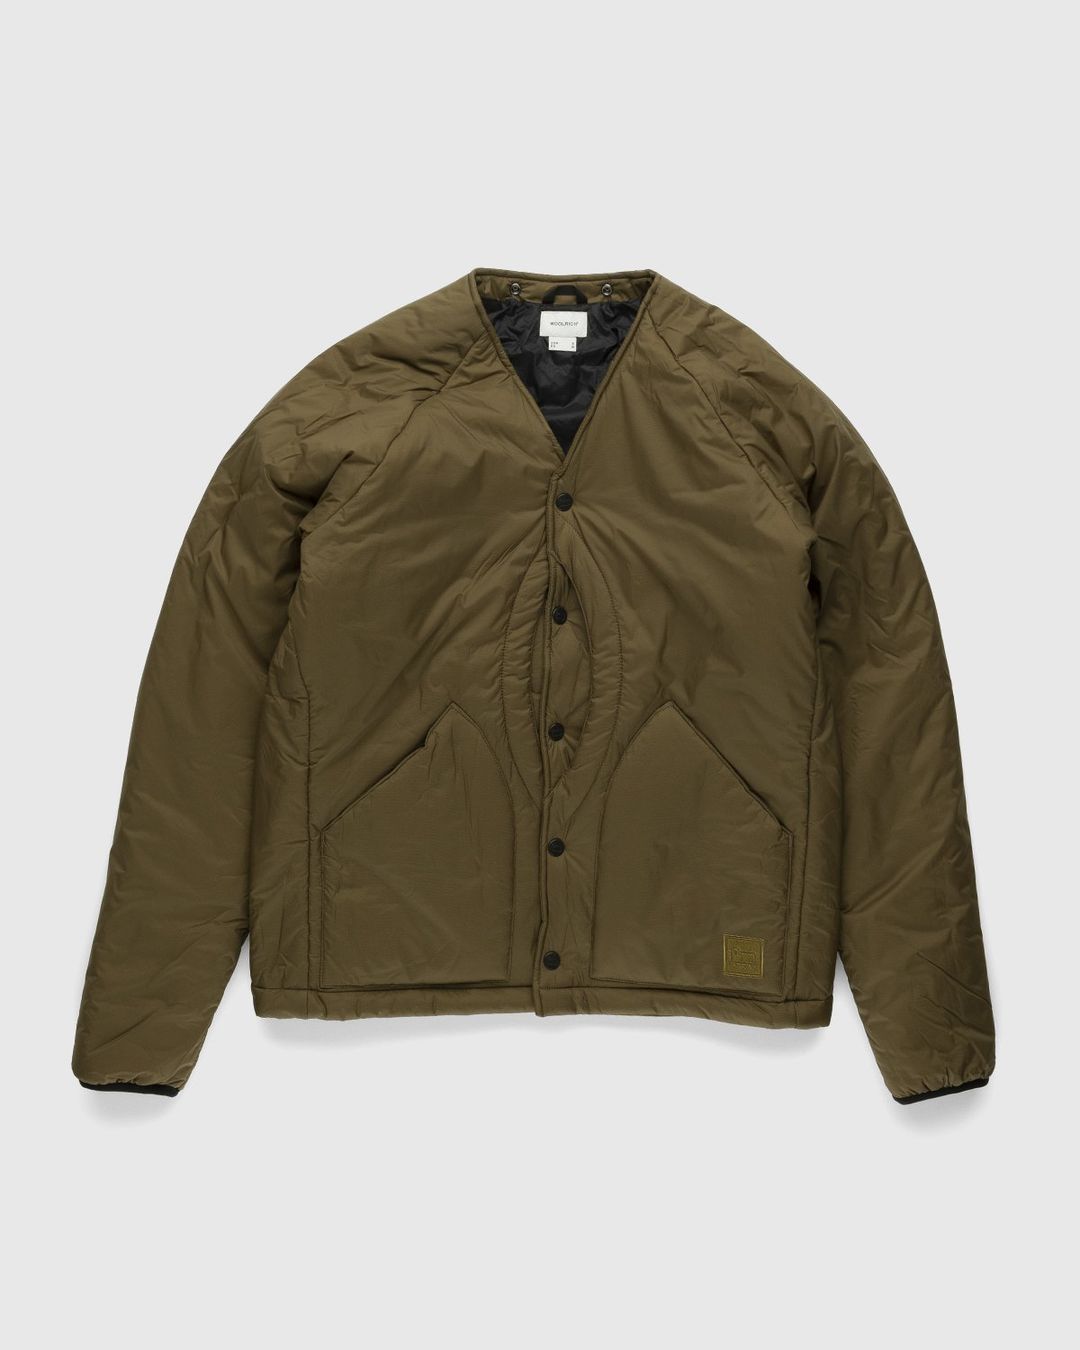 Woolrich – 3 in 1 Freedom Jacket Olive | Highsnobiety Shop